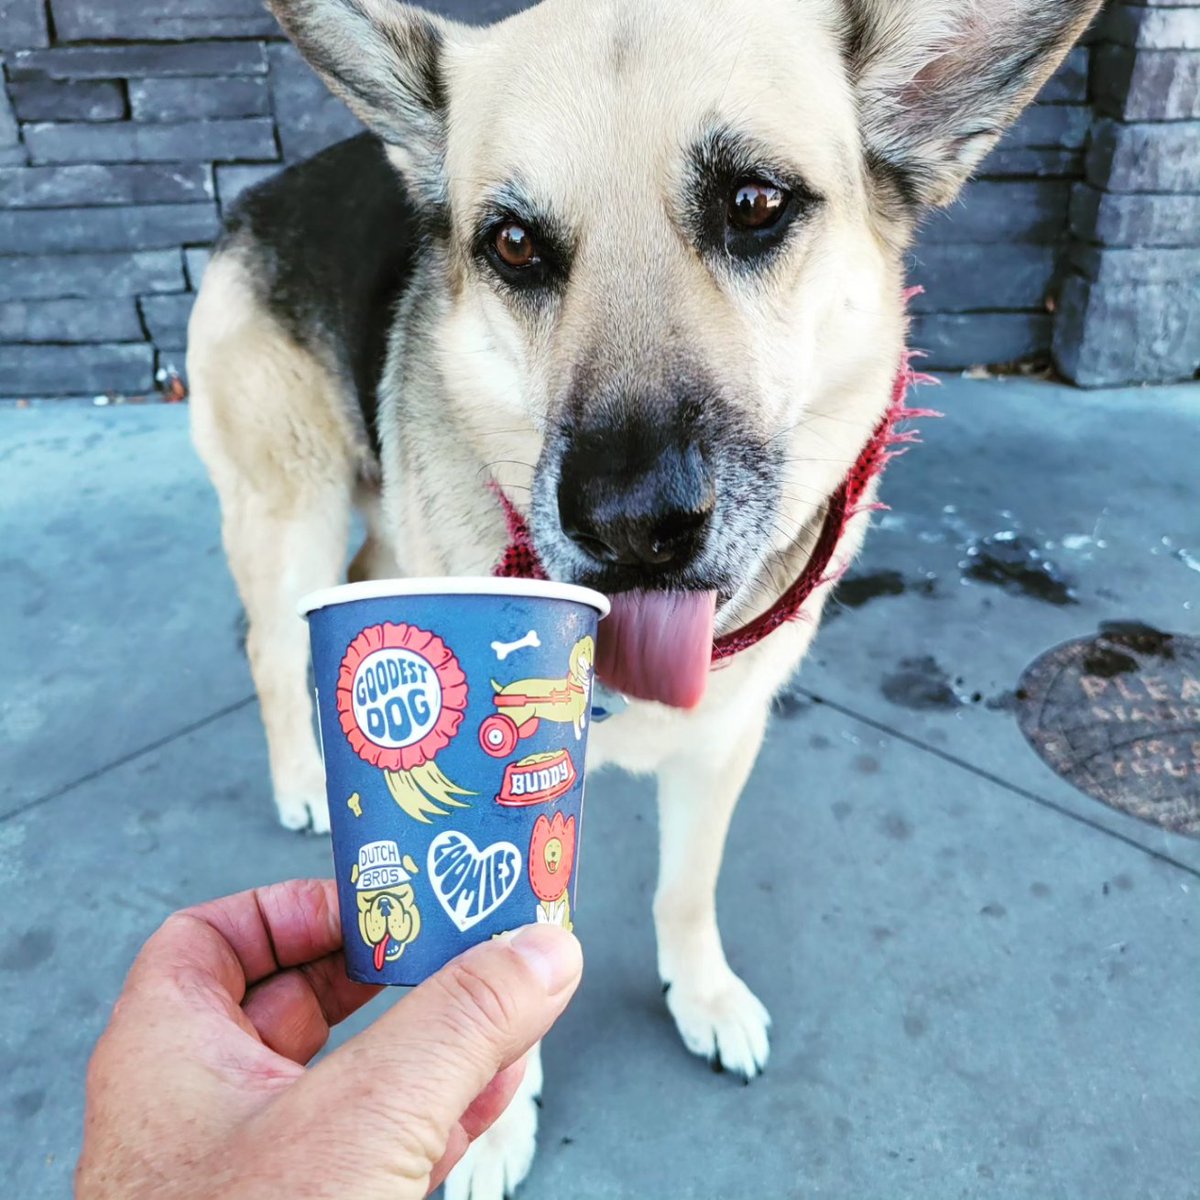 Montana enjoys his favorite puppachino  @DutchBros  in NEW pupcup cup! #pupcup #puppachino #dutchbrothers #bestcoffee #german_shepherd #dogslife #californiadog #bestdayever #coffeelover #Puppynet #California #TrendingNow